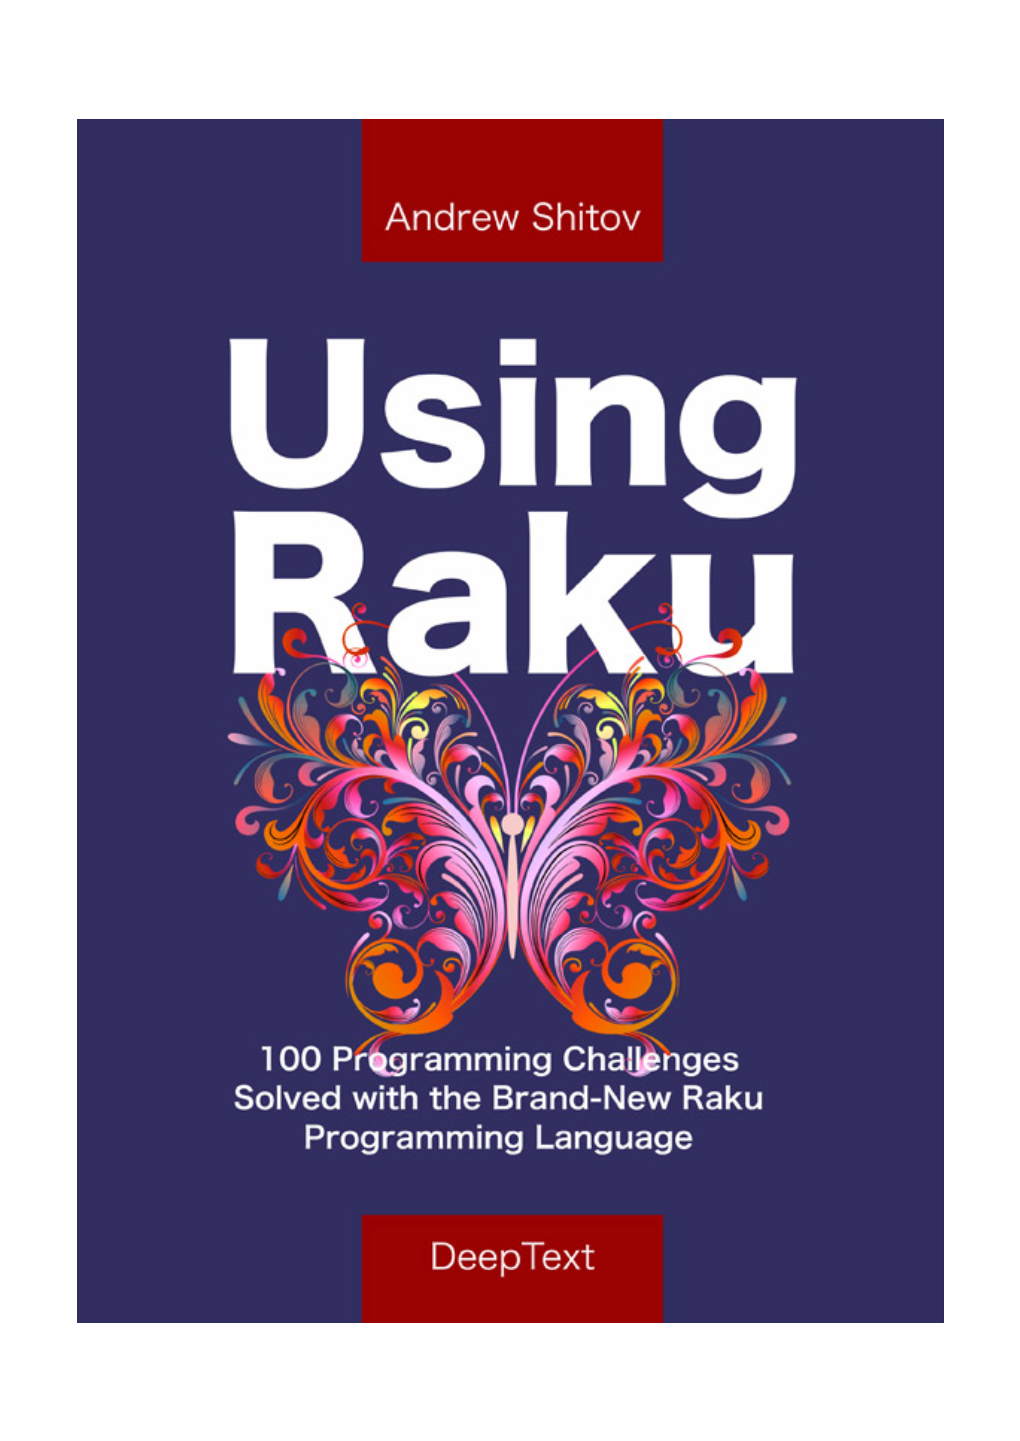 Download the Using Raku Book